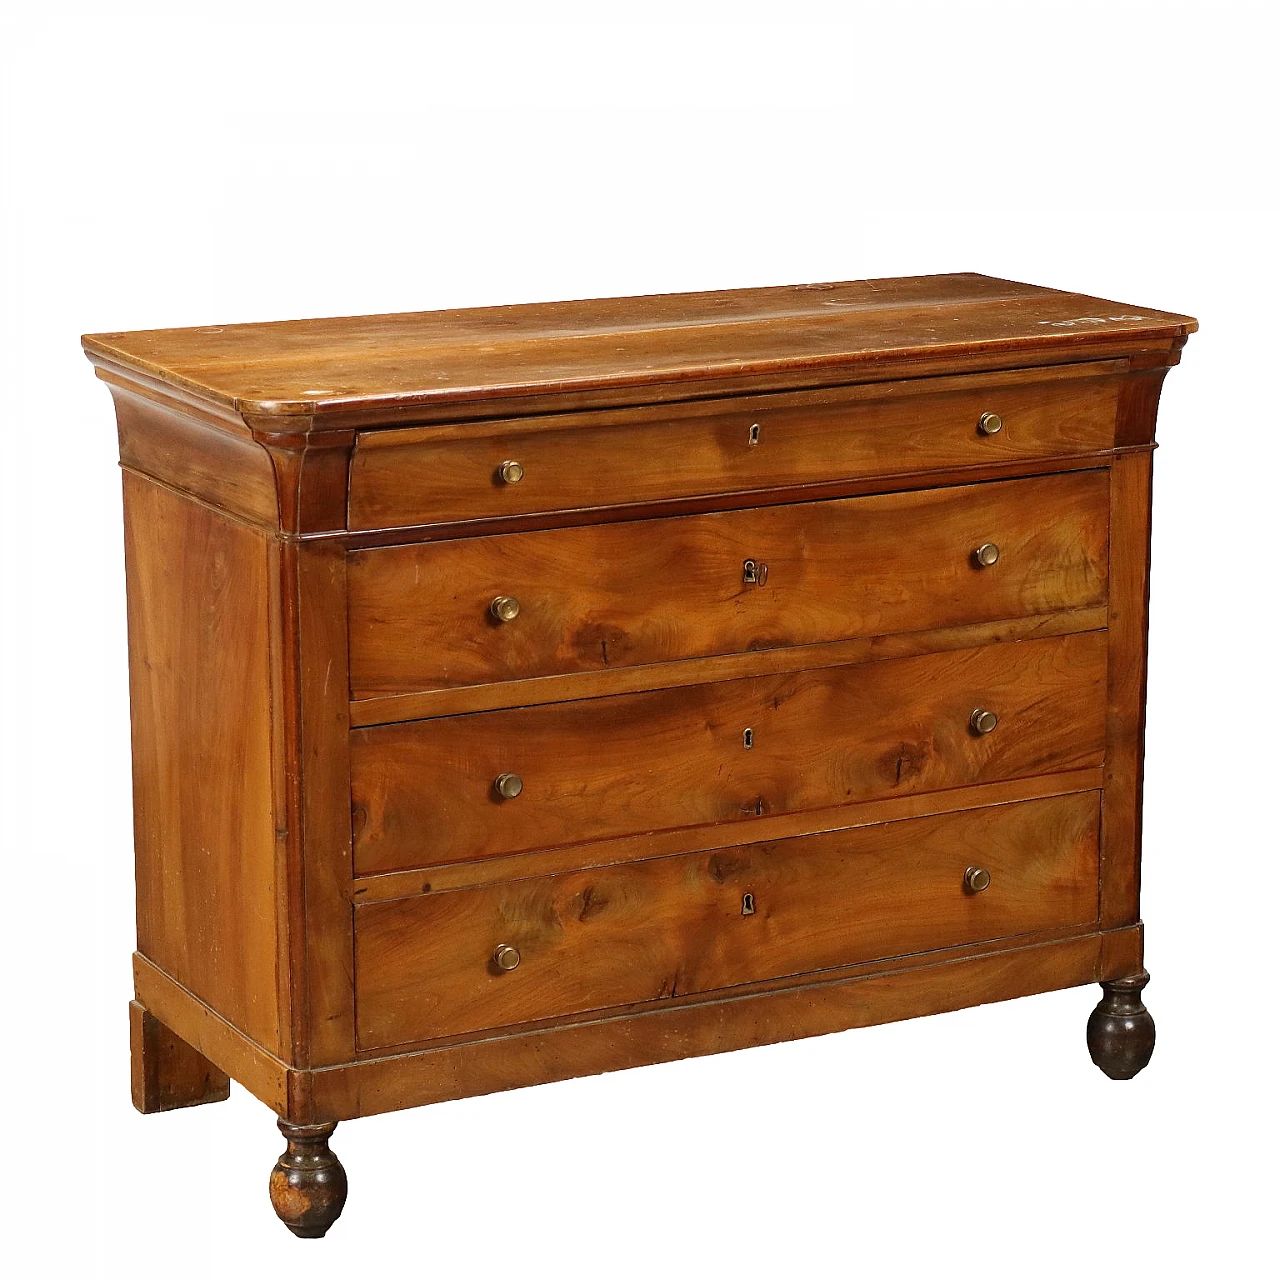 Walnut & poplar dresser with 4 drawers and turned legs, 19th century 1